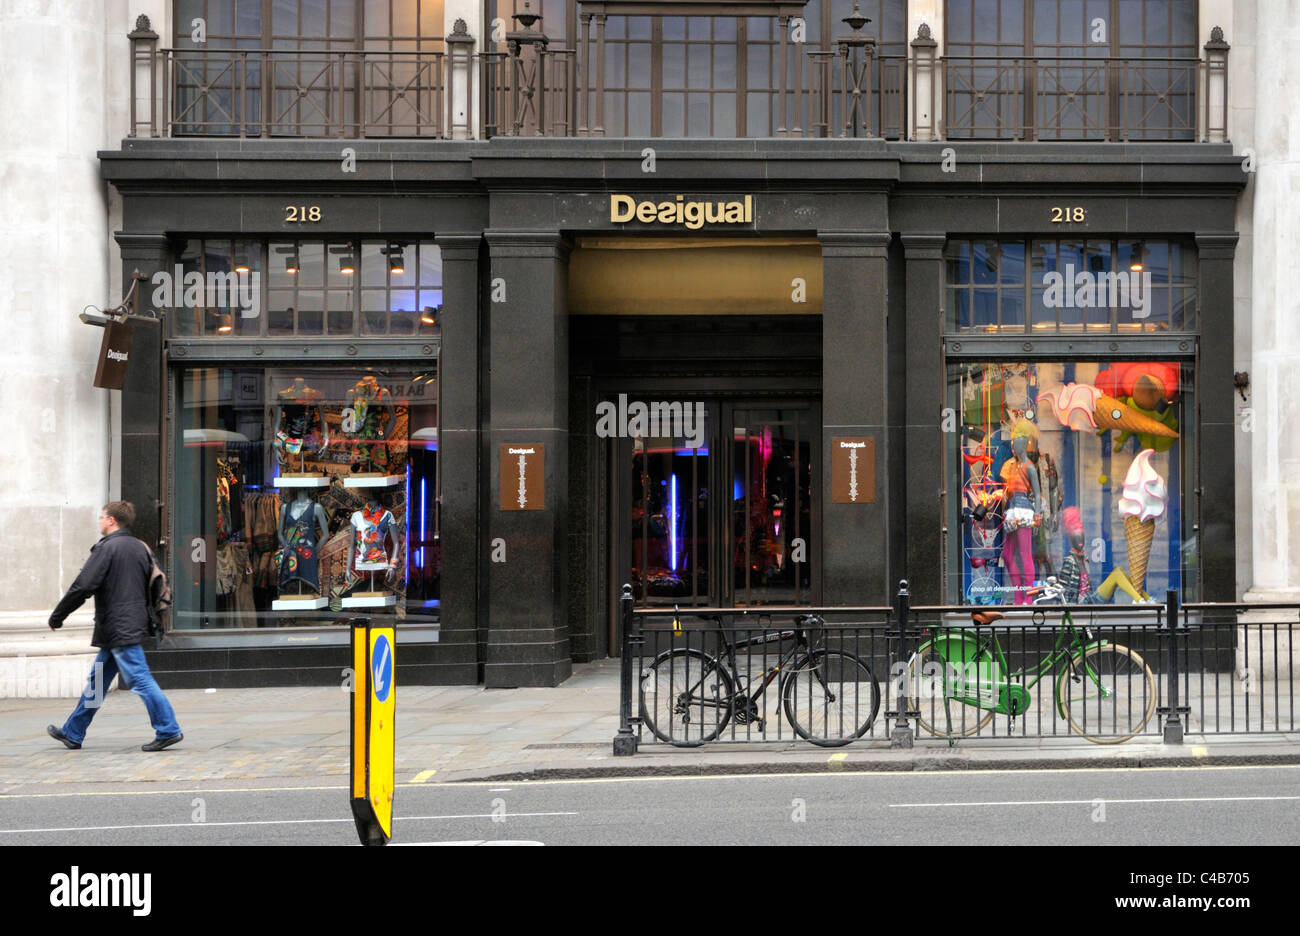 Desigual casual store on Regent Street, London Photo - Alamy